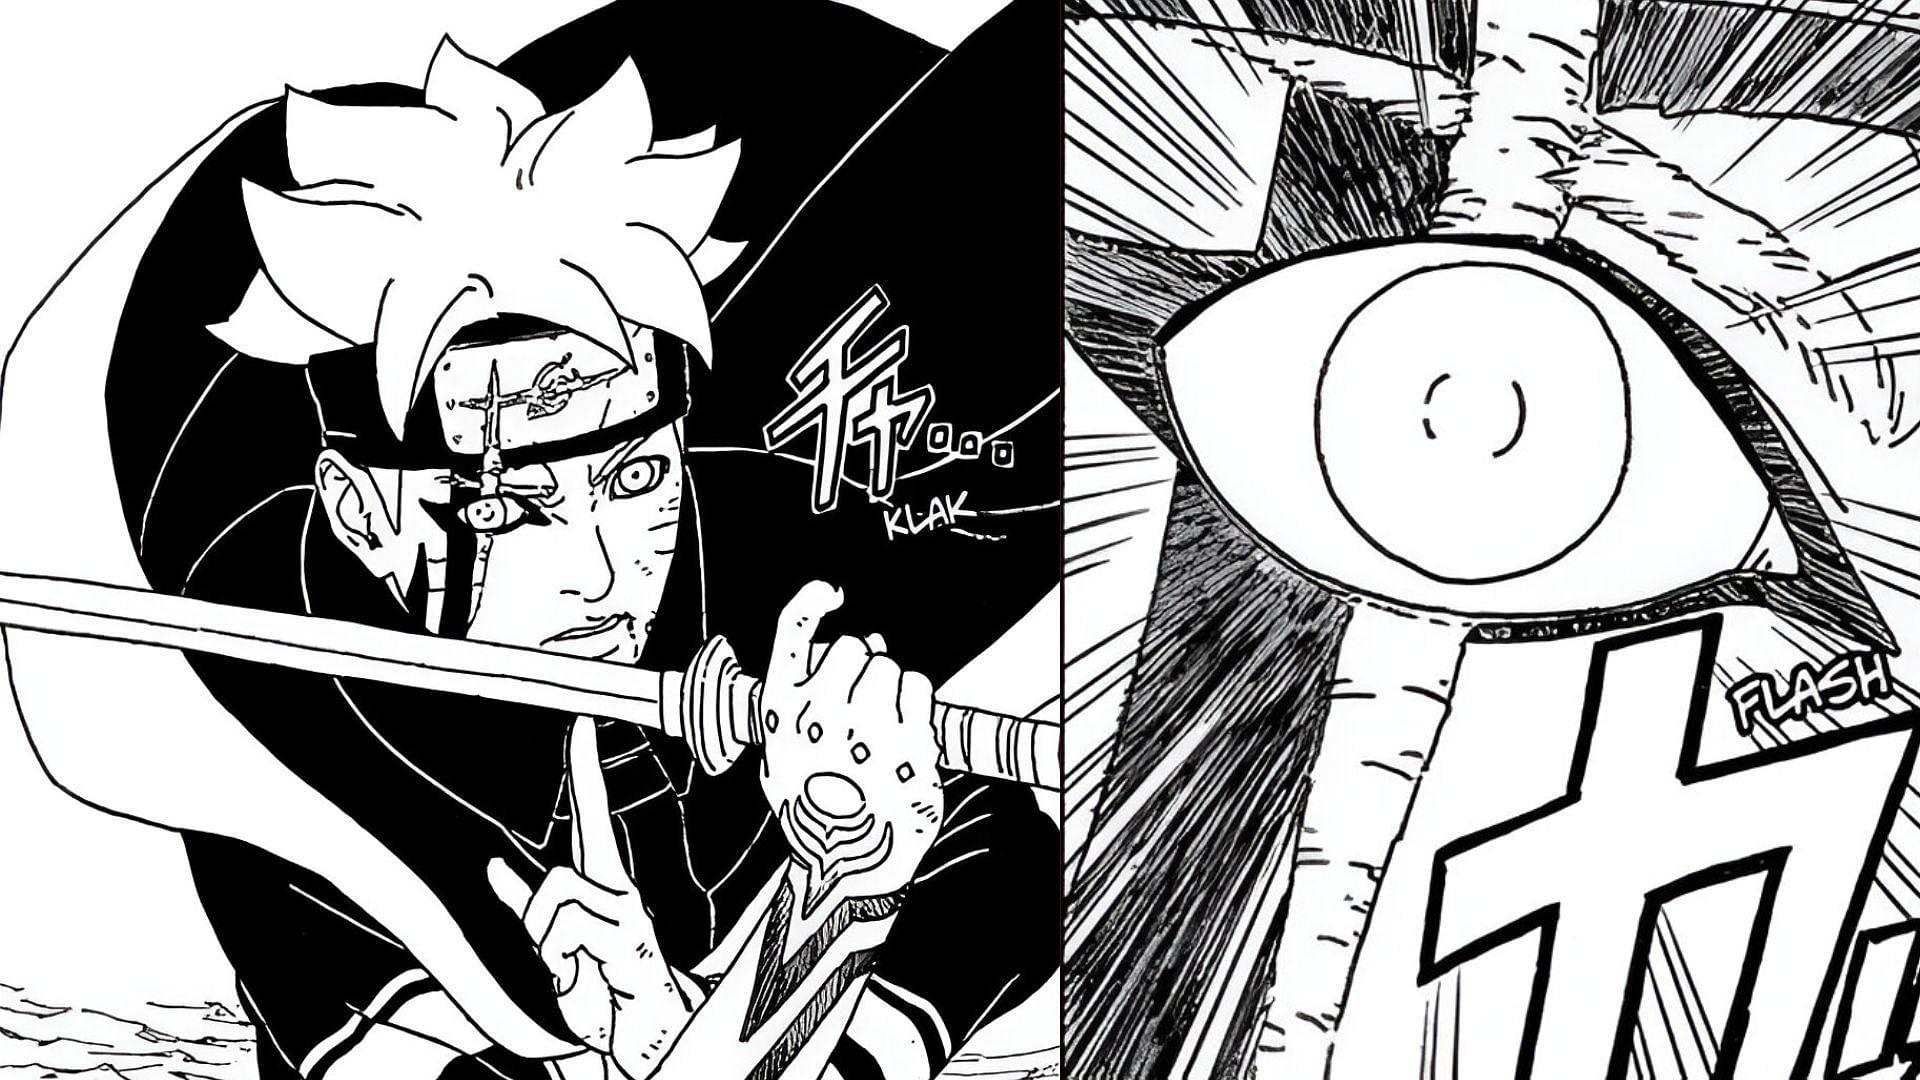 Boruto using the Jougan in Boruto: Naruto Next Generations manga (Image via Studio Pierrot)